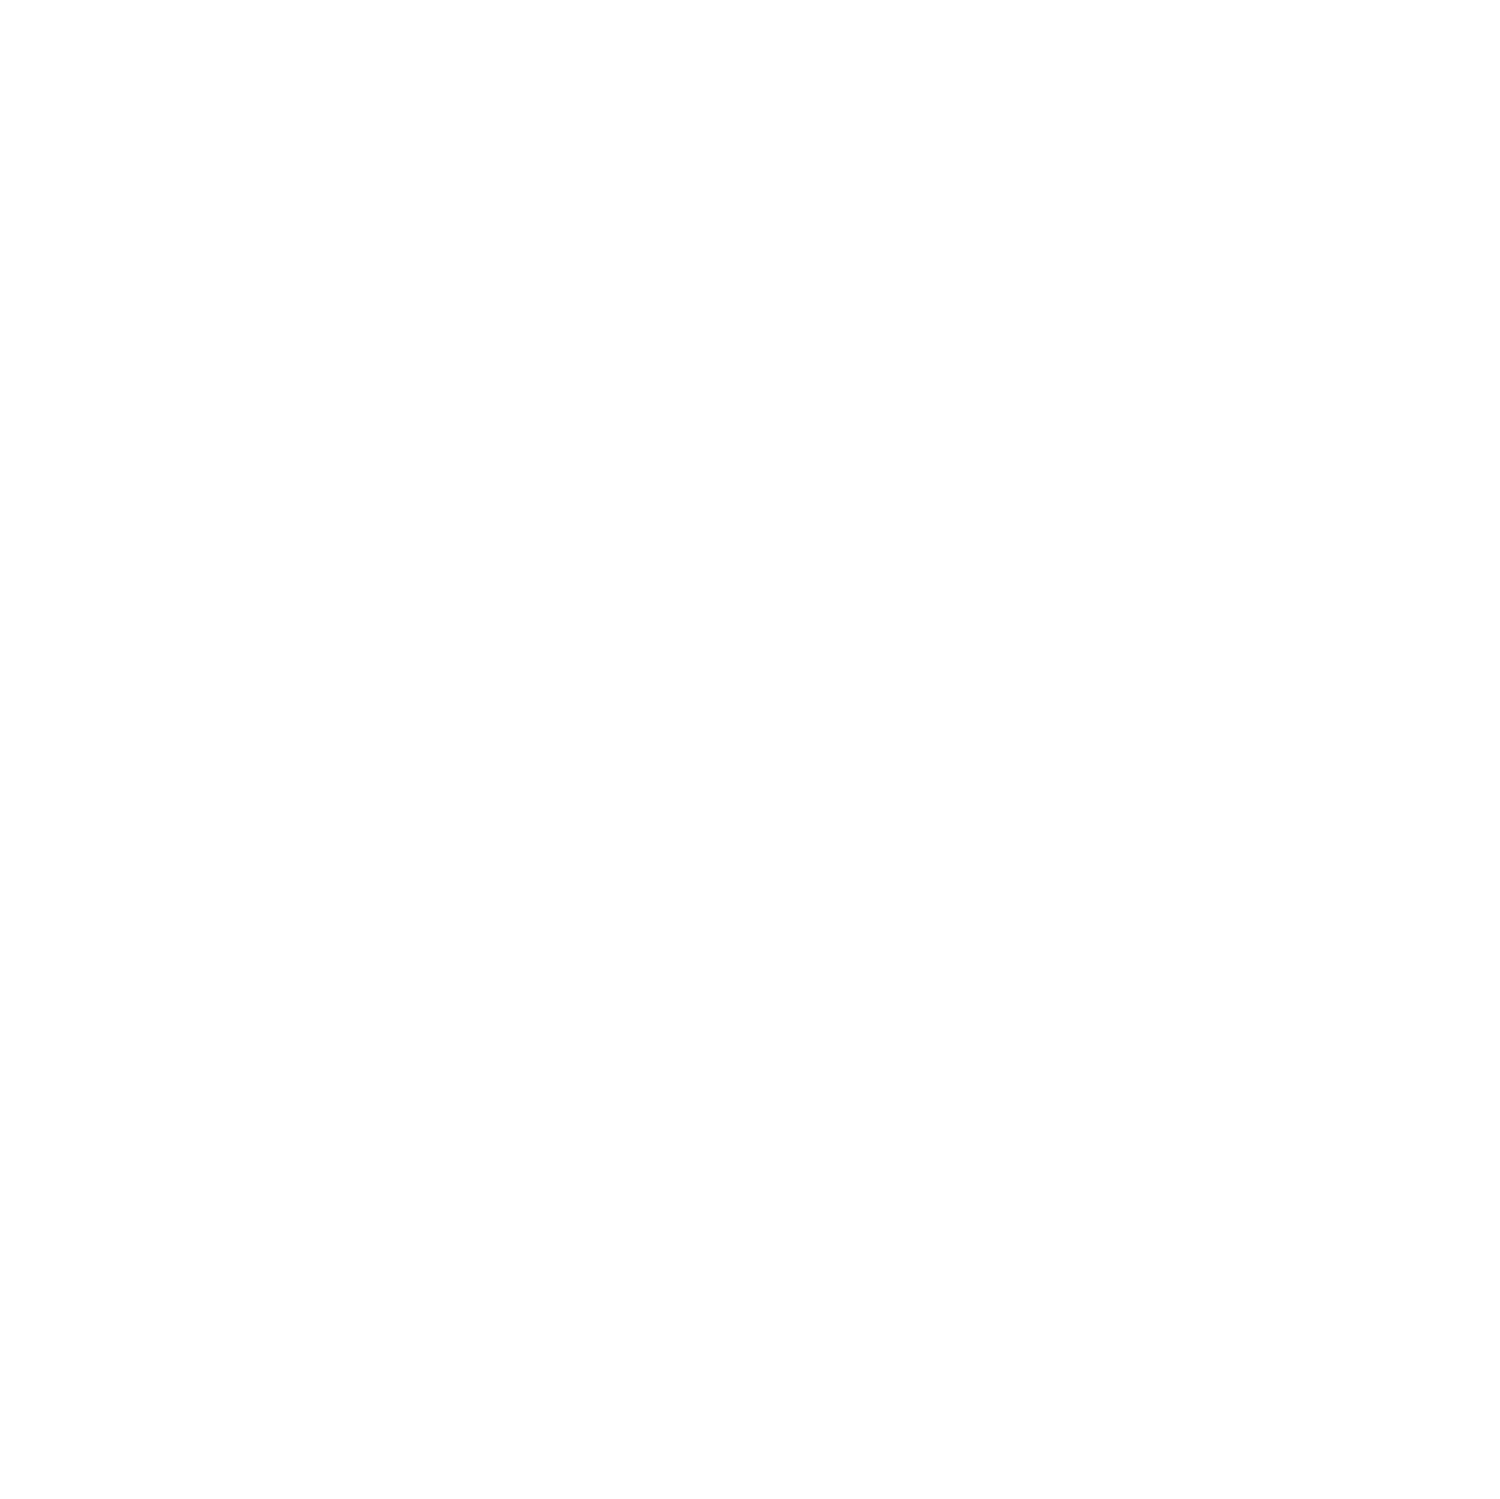 Loomis Construction